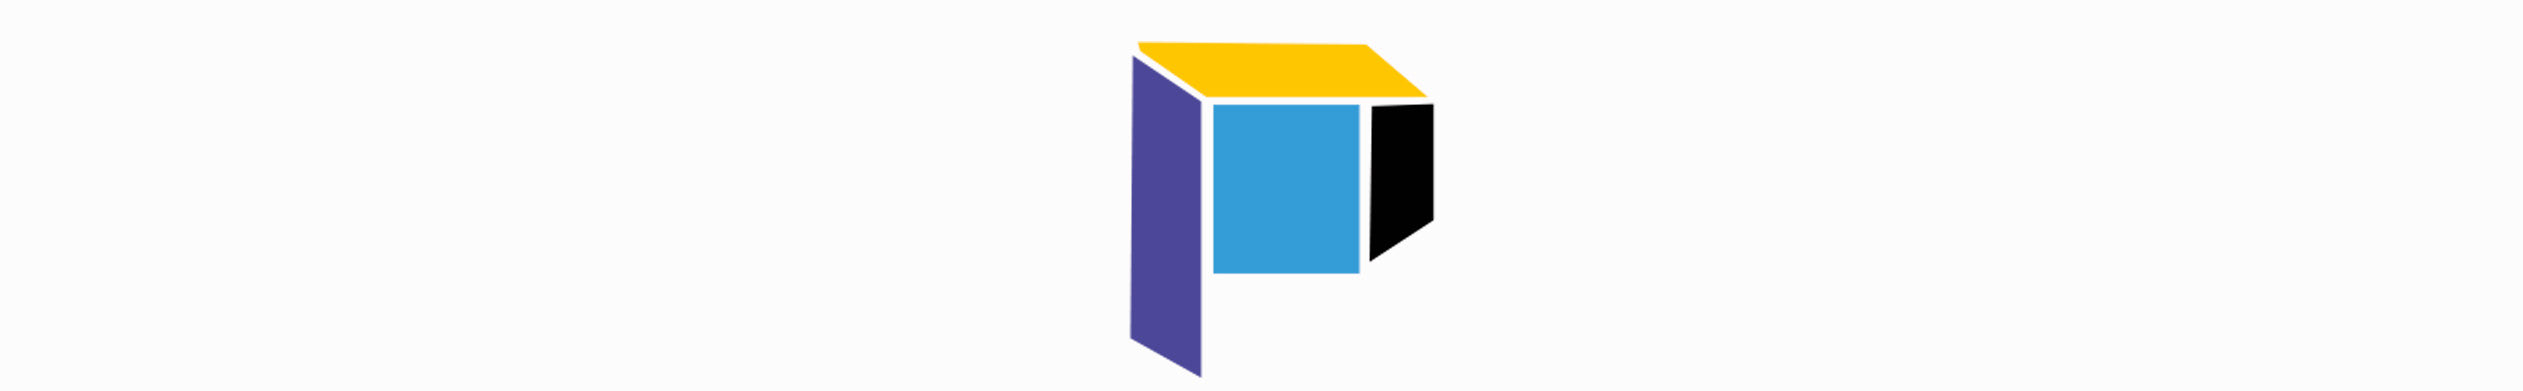 Agencia Pixxel's profile banner